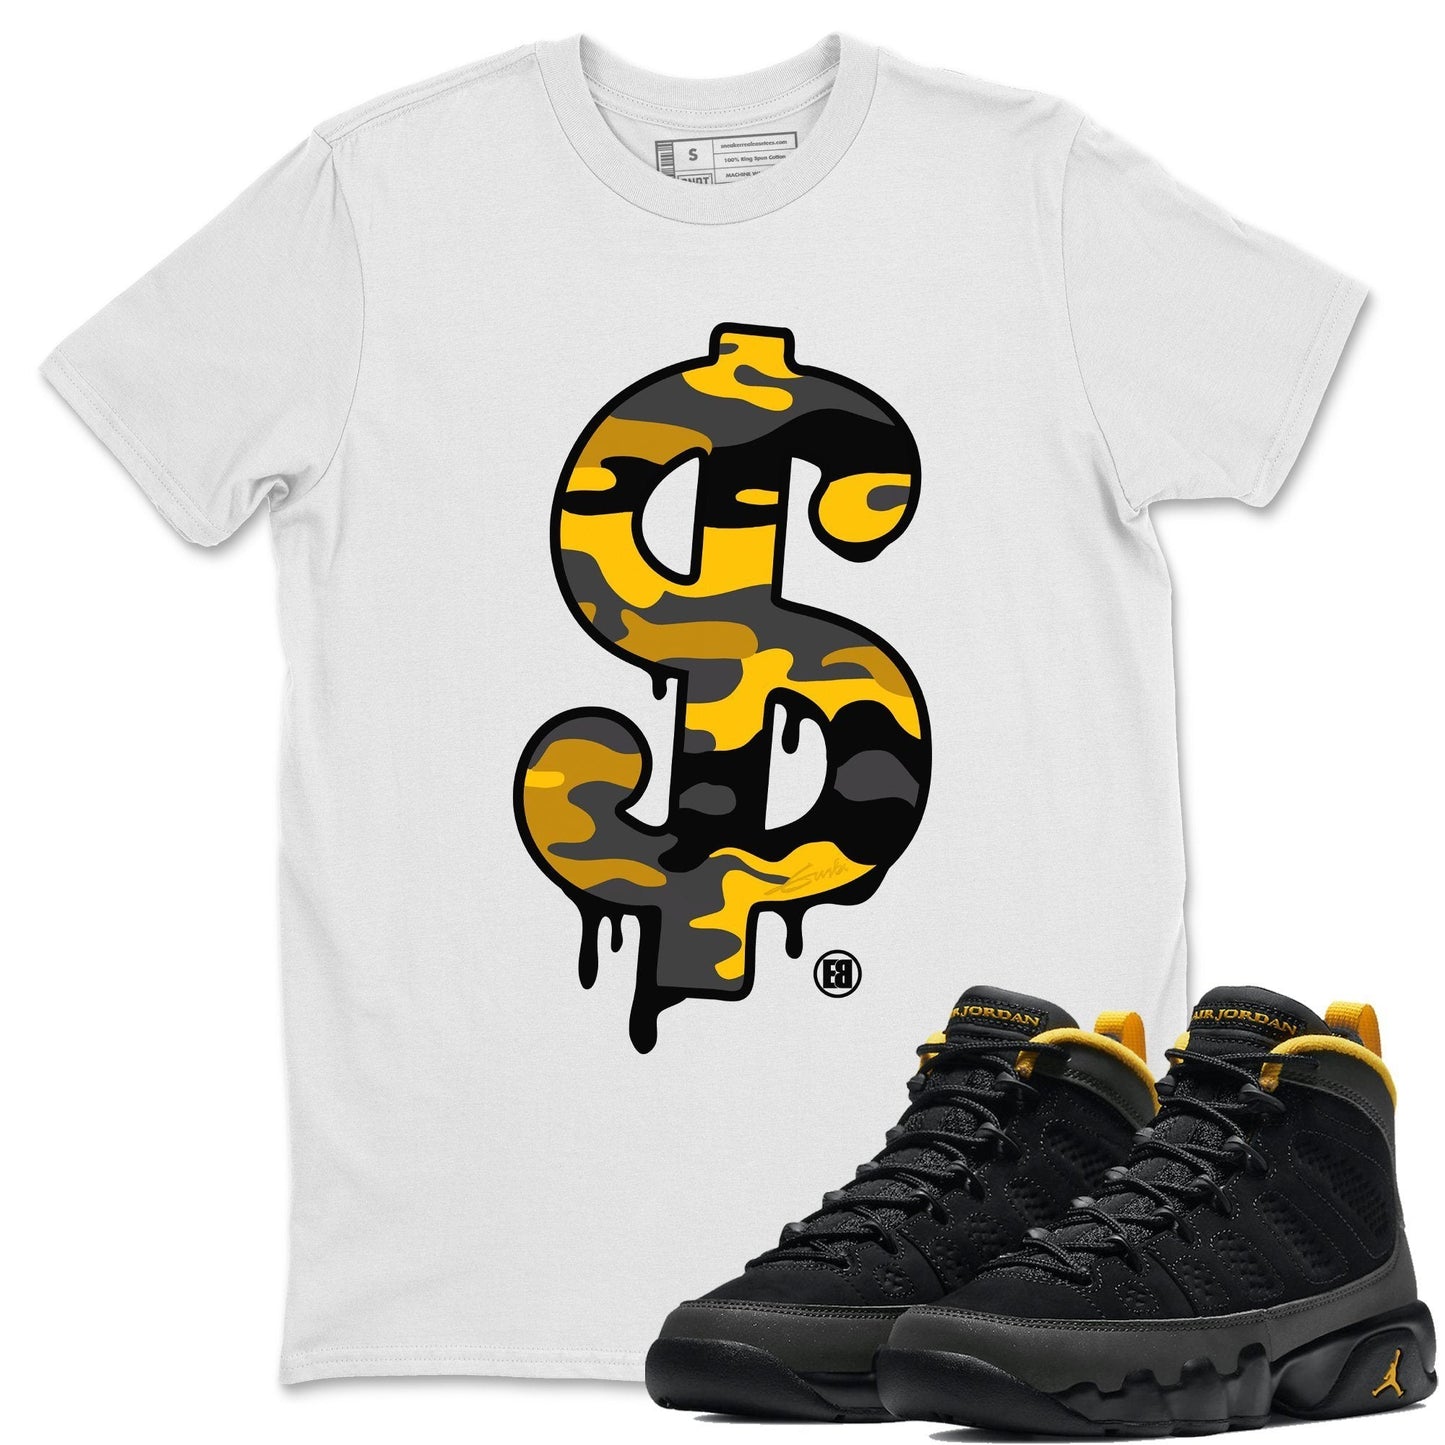 Jordan 9 University Gold Shirt To Match Jordans Dollar Camo Sneaker Tees Jordan 9 University Gold Drip Gear Zone Sneaker Matching Clothing Unisex Shirts